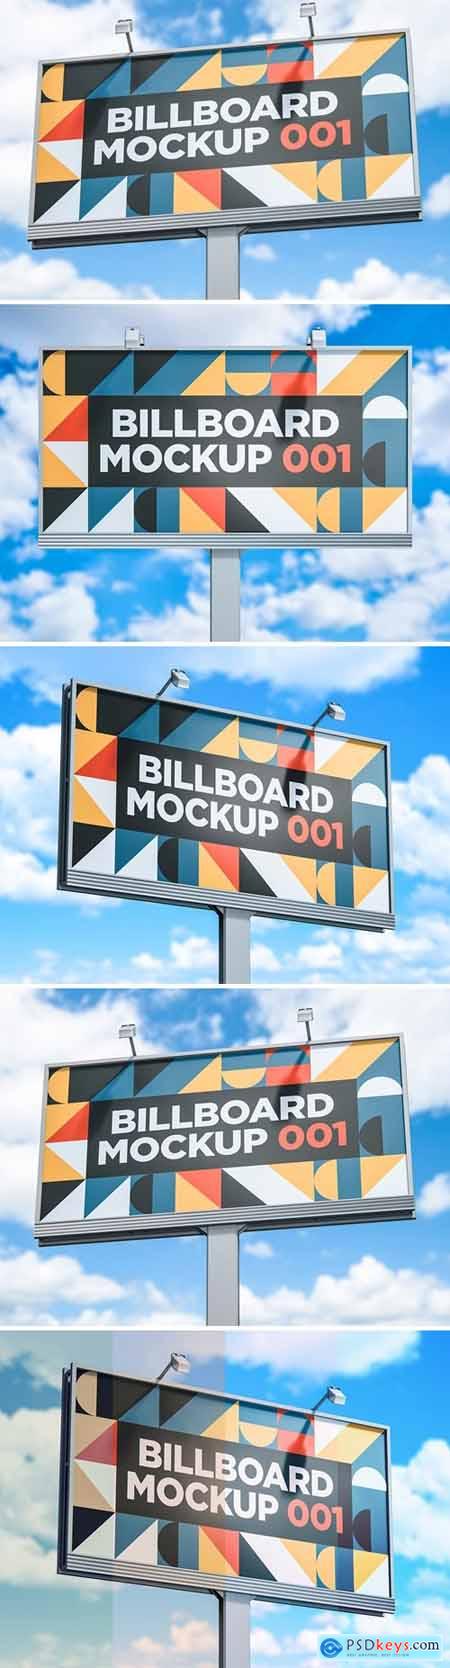 Billboard Mockup 001